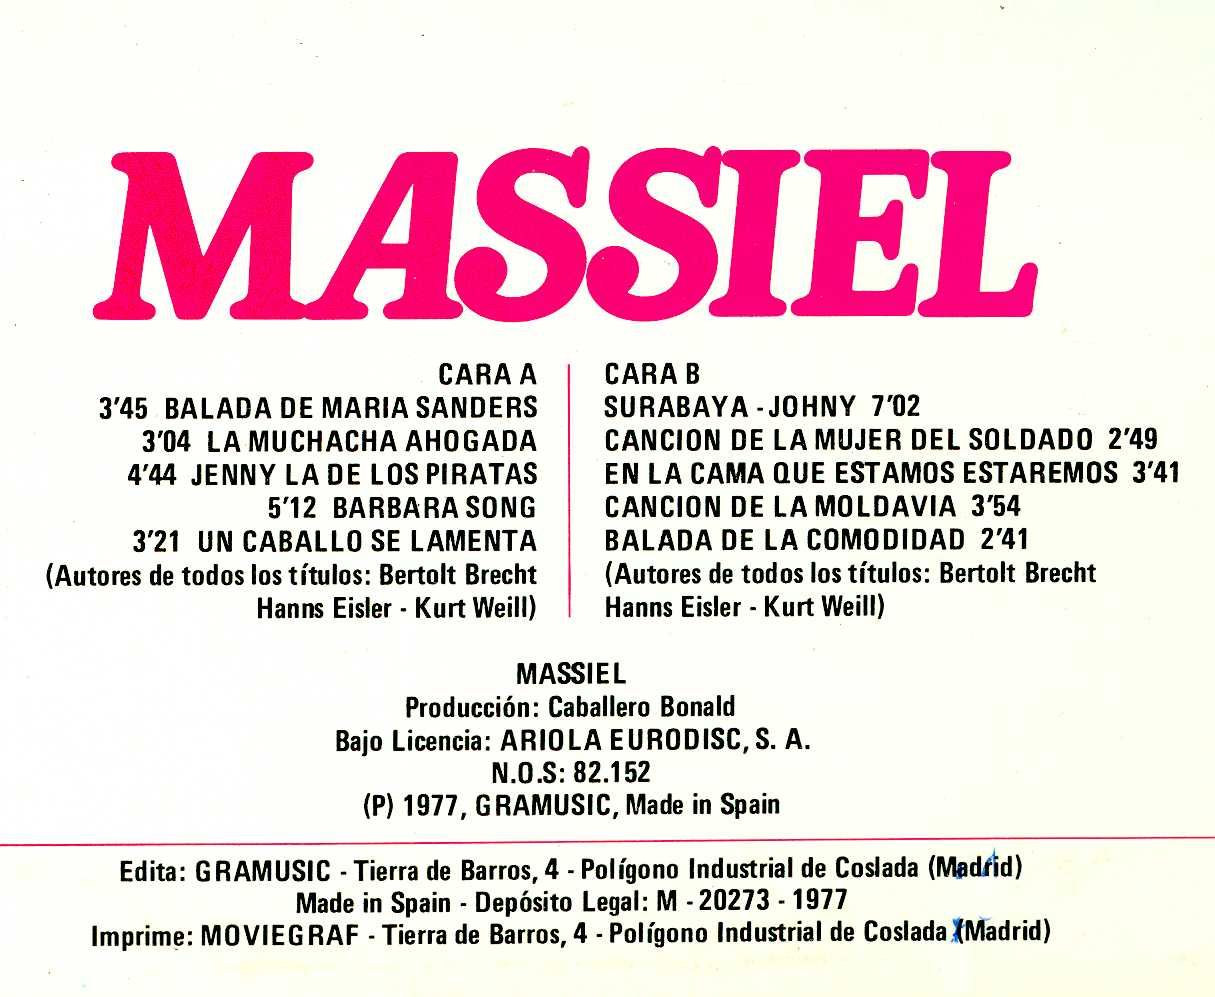 1 1034 - Massiel - Baladas y canciones de Bertolt Brecht (1977)